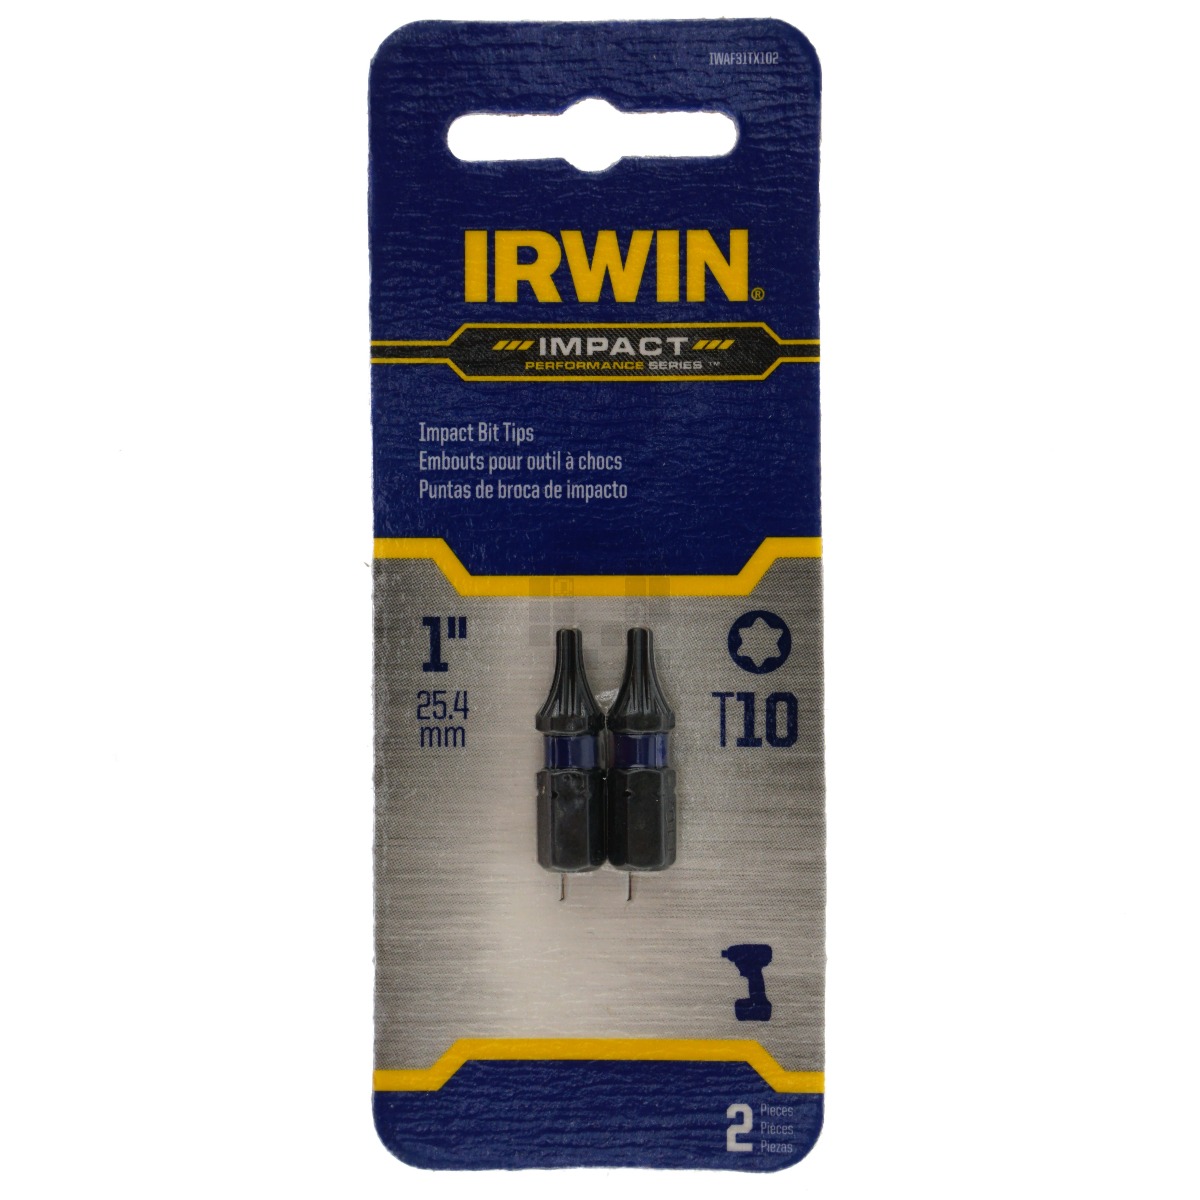 Irwin IWAF31TX102 T10 Torx Impact Performance Series Bit Tip, 1" Length, 2 Pack